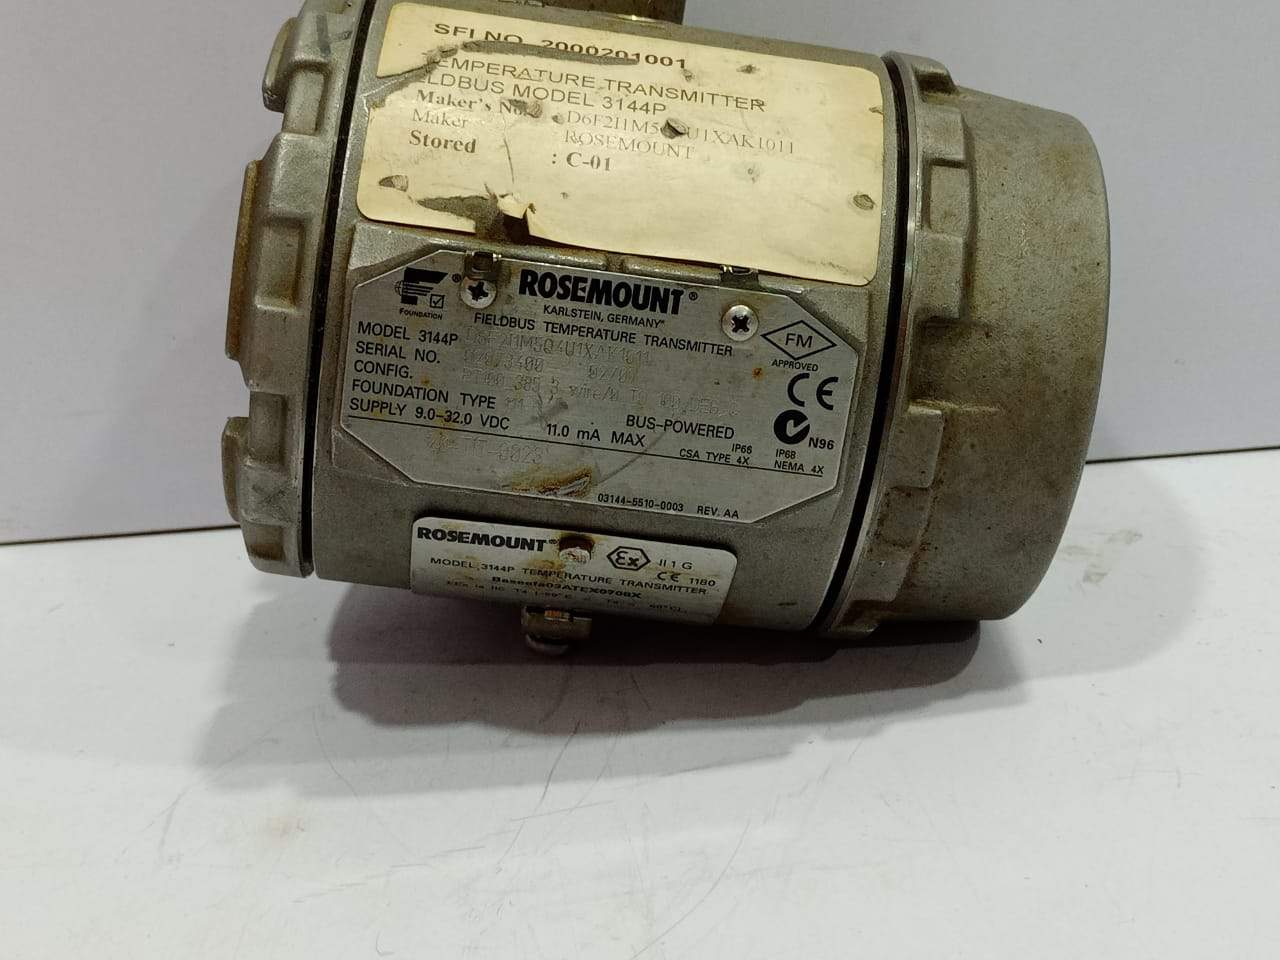 Rosemount 3144P 03144-5501-0001 Rev AA Temperature Transmitter